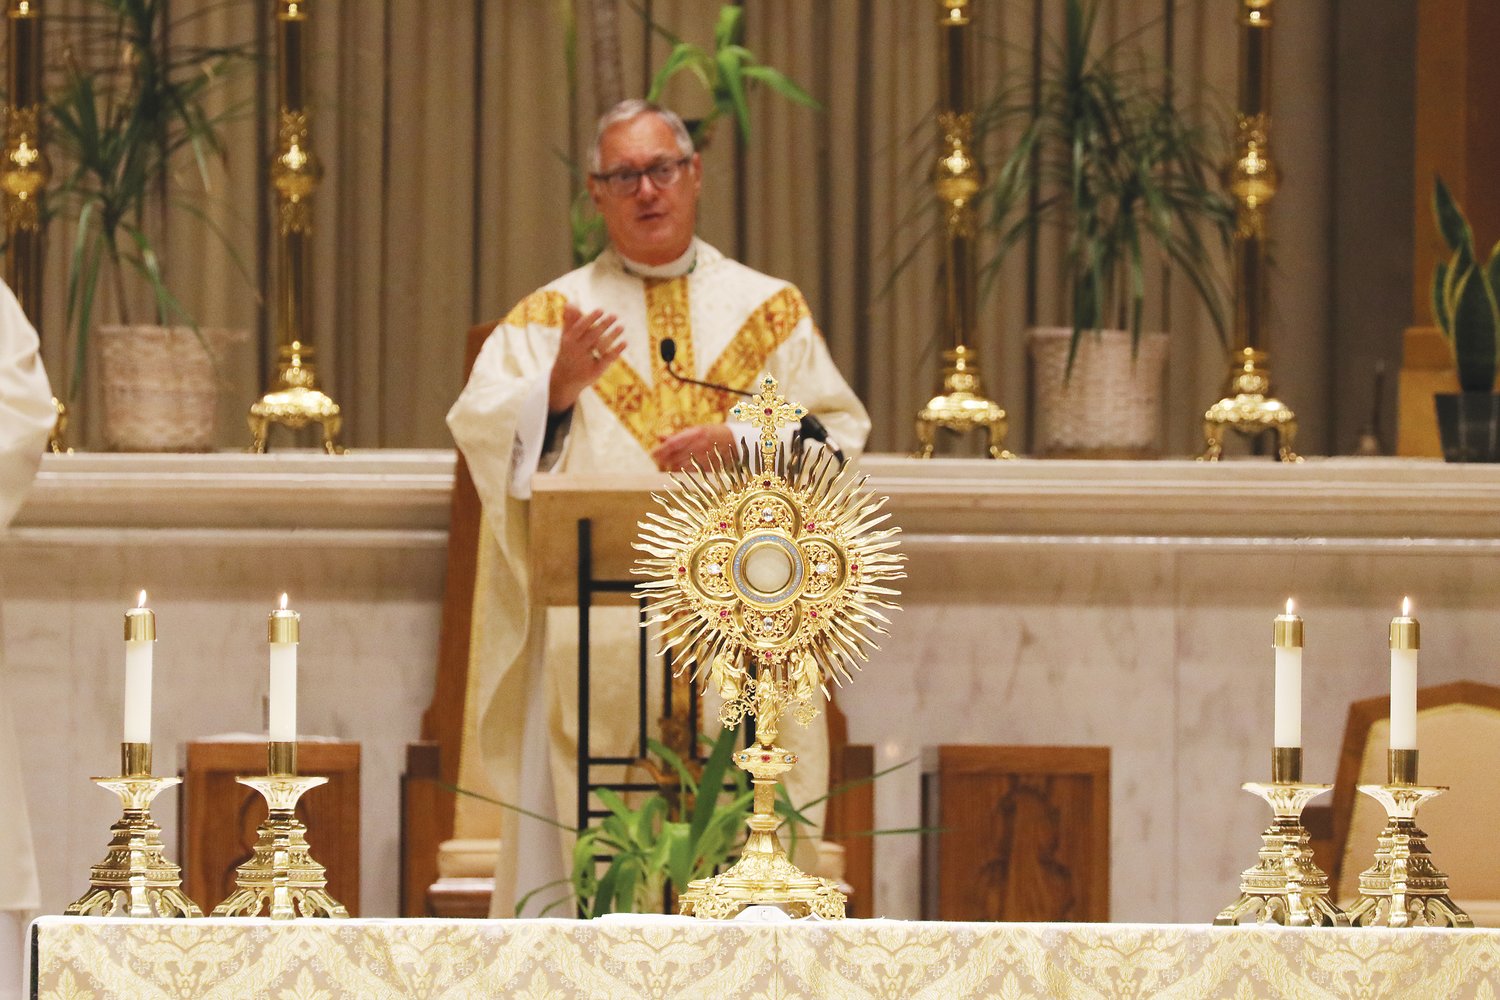 Bishop Thomas J. Tobin served as principal celebrant at the Human Life Guild Mass.